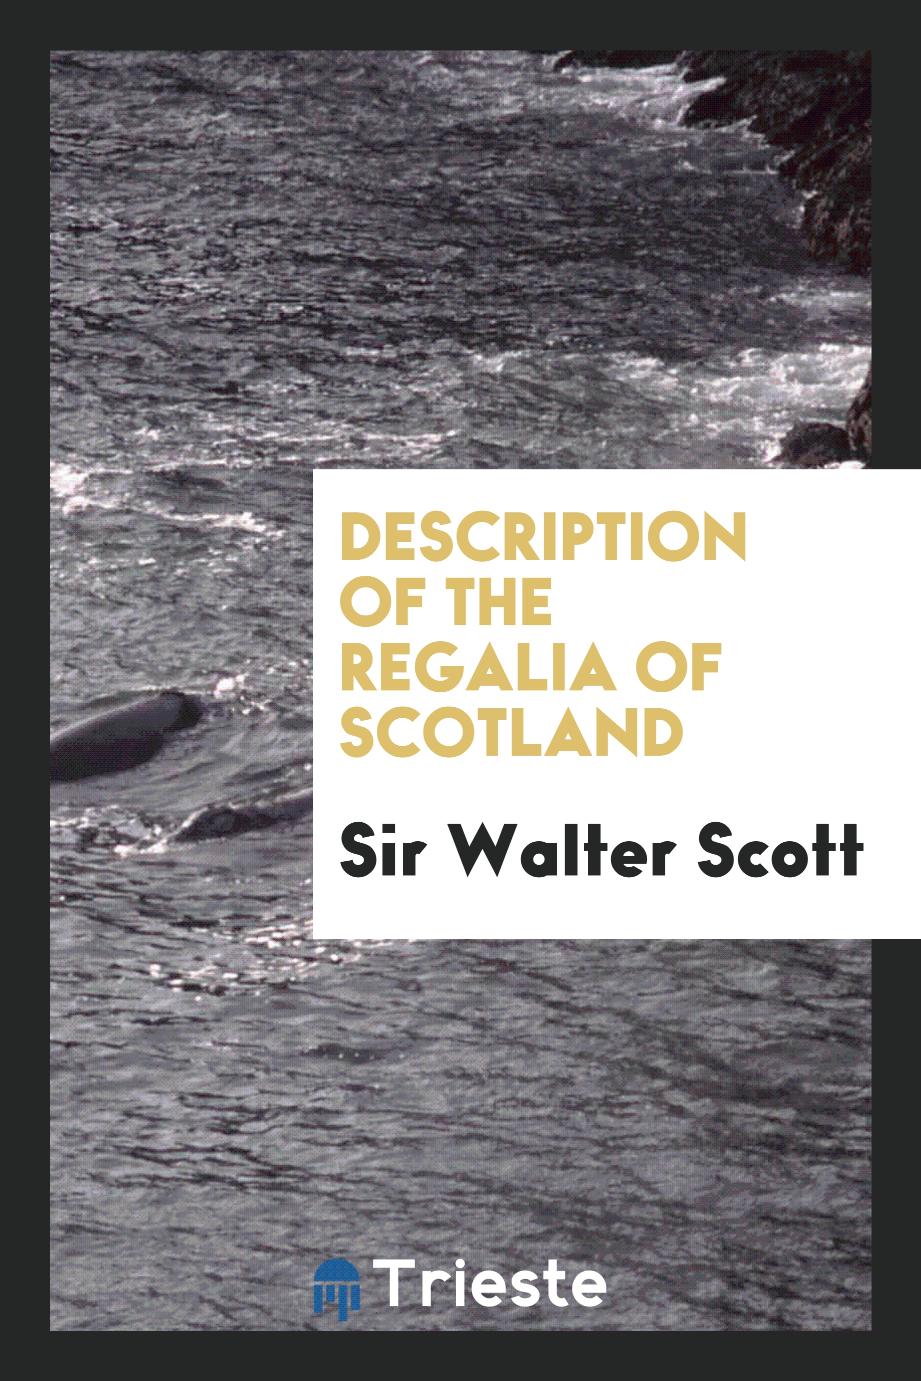 Description of the regalia of Scotland